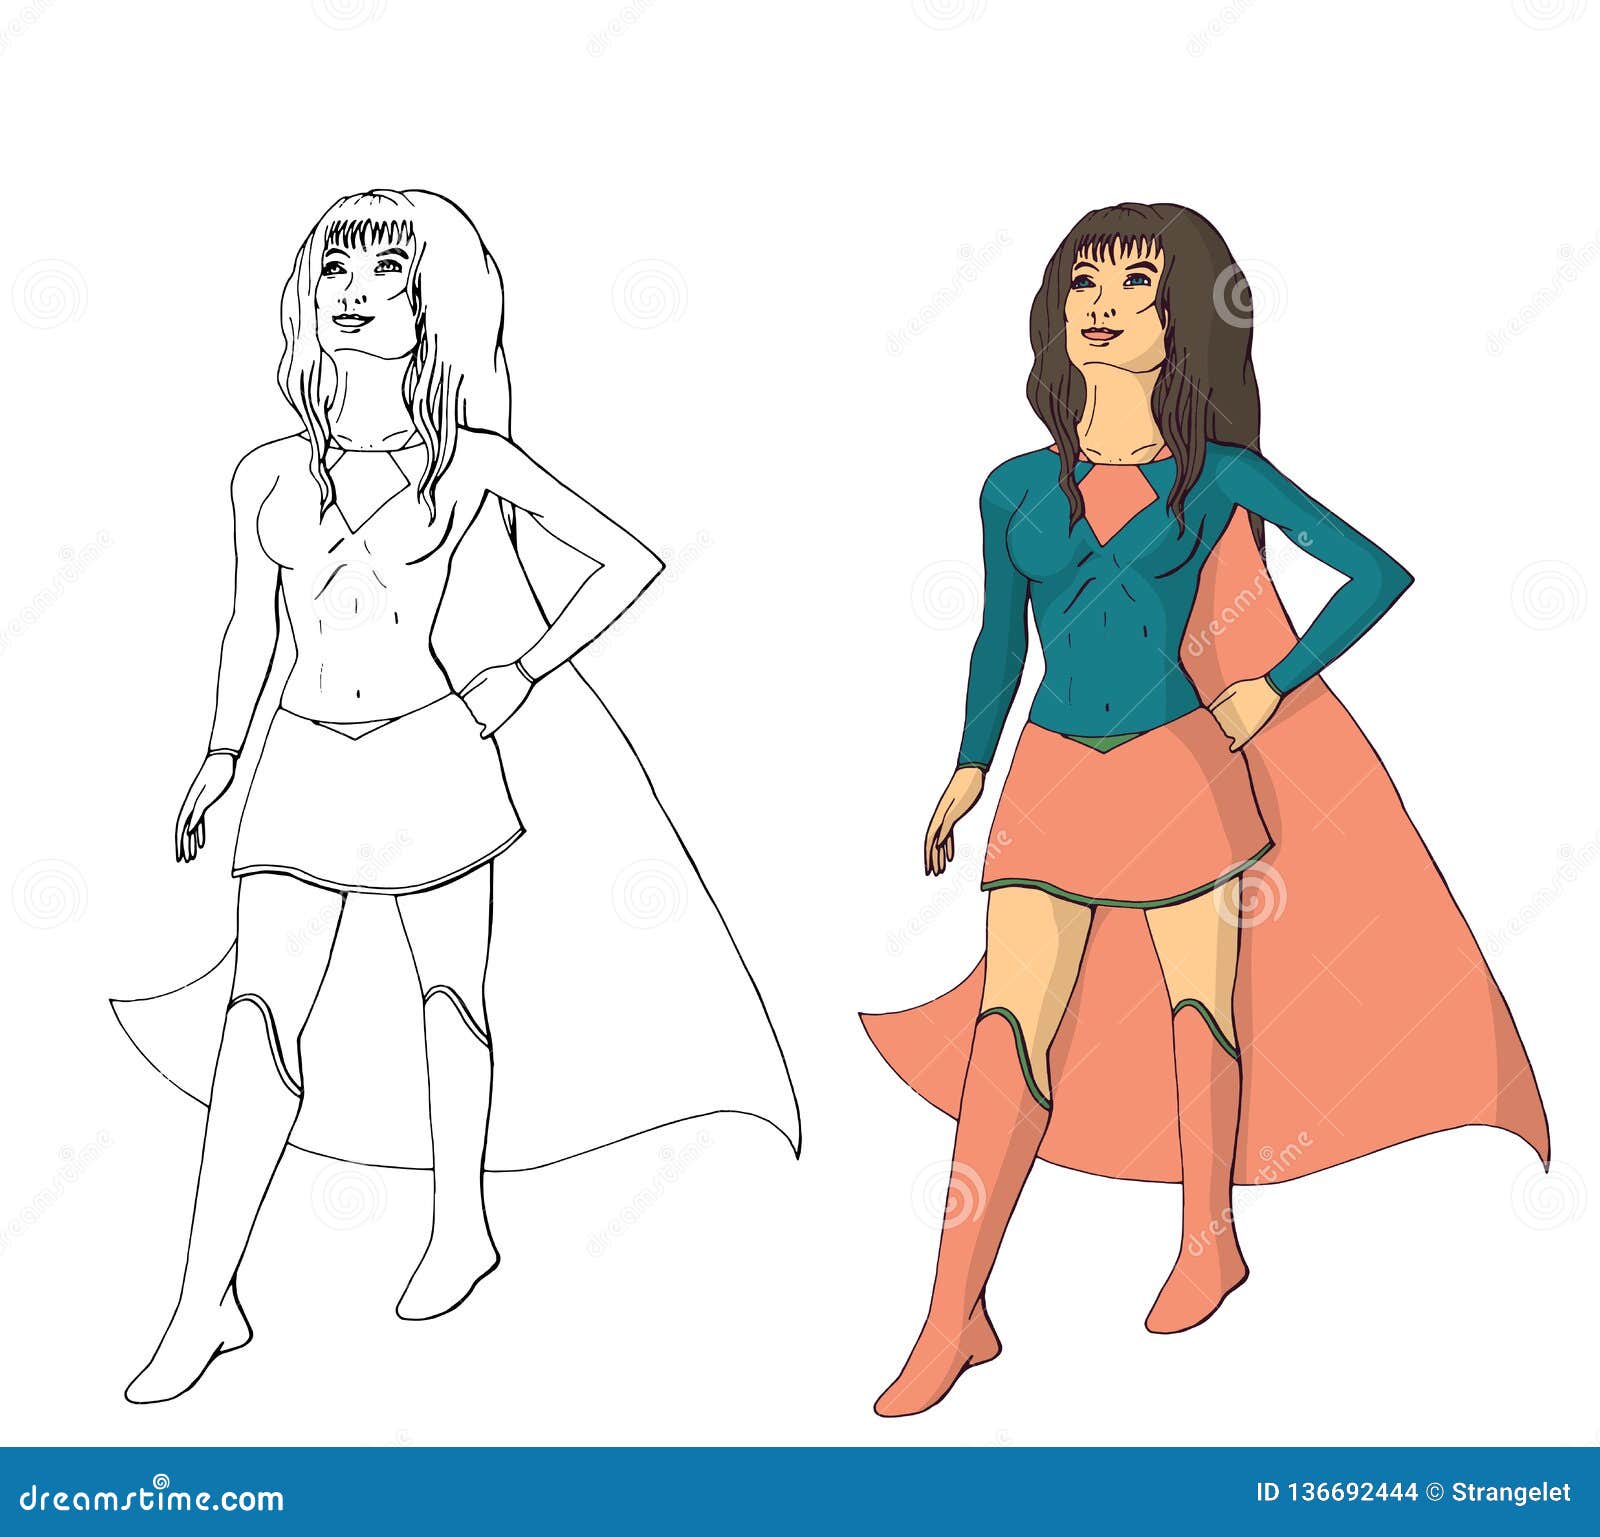 Tutorial Tuesday: Action Pose Character Sheets | idrawdigital - Tutorials  for Drawing Digital Comics | Drawing poses, Drawing superheroes, Drawings